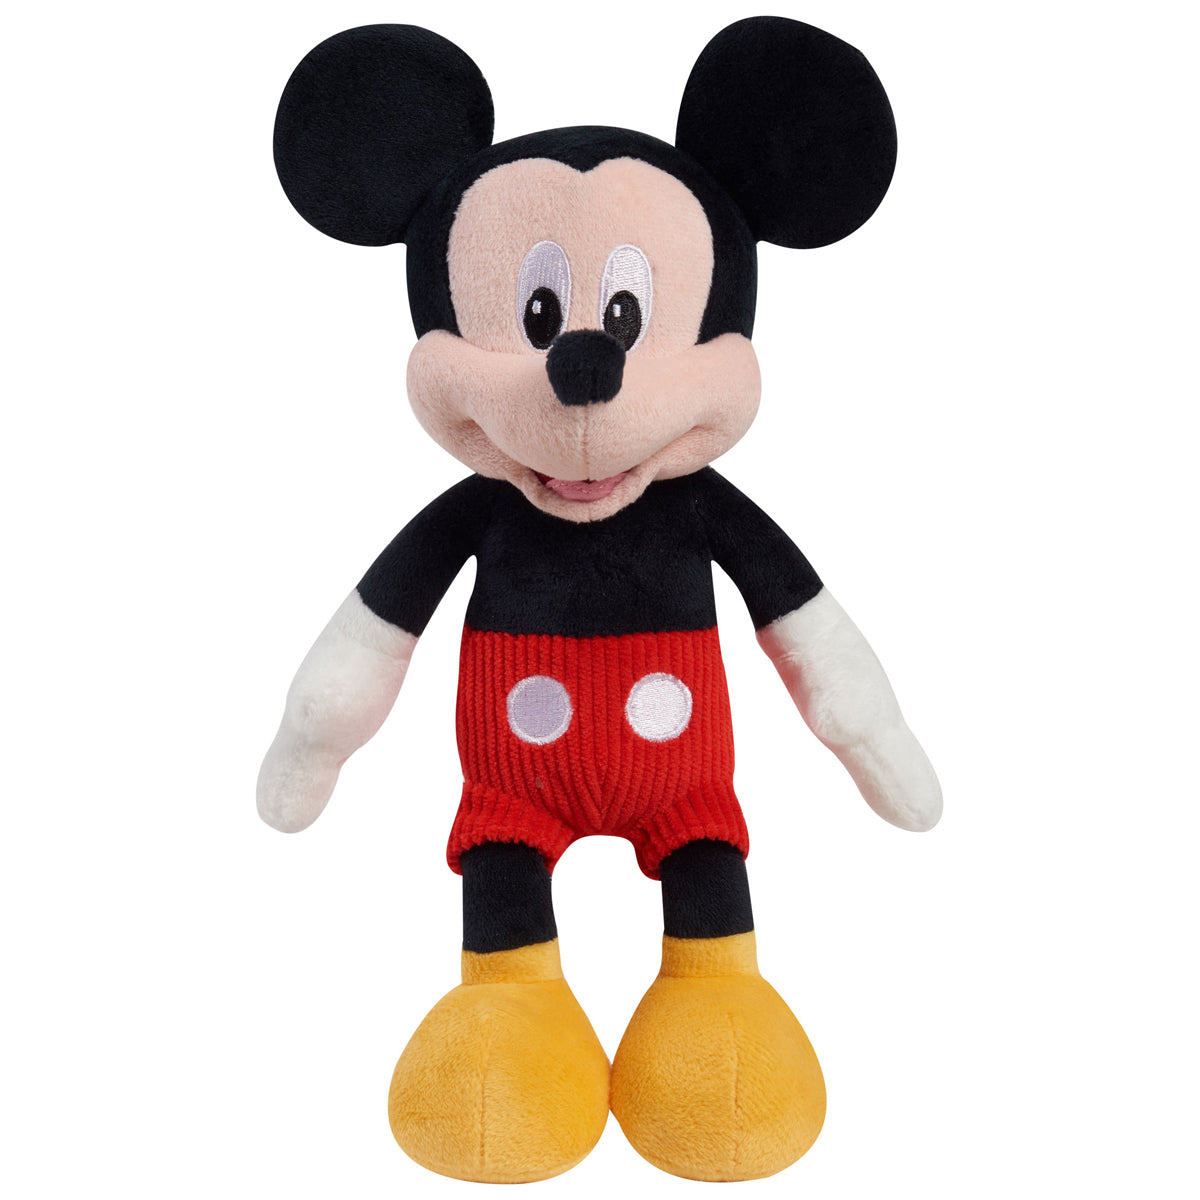 Disney Classics 25cm Soft Toy with Sound (Styles Vary)